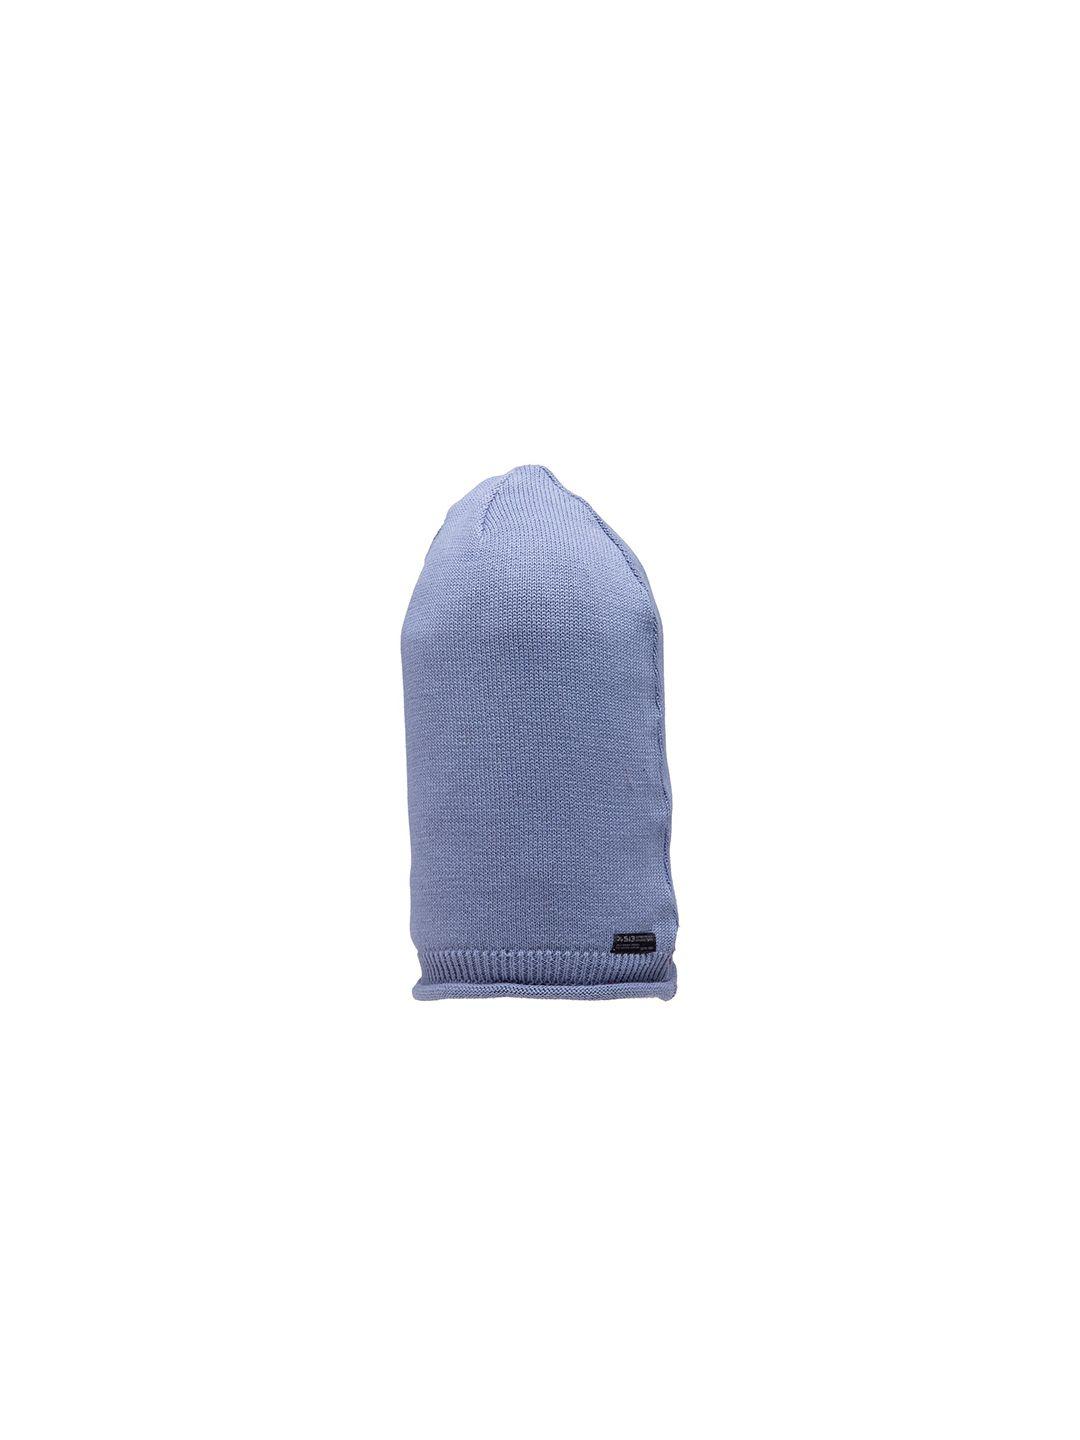 513 men blue knitted cotton beanie cap